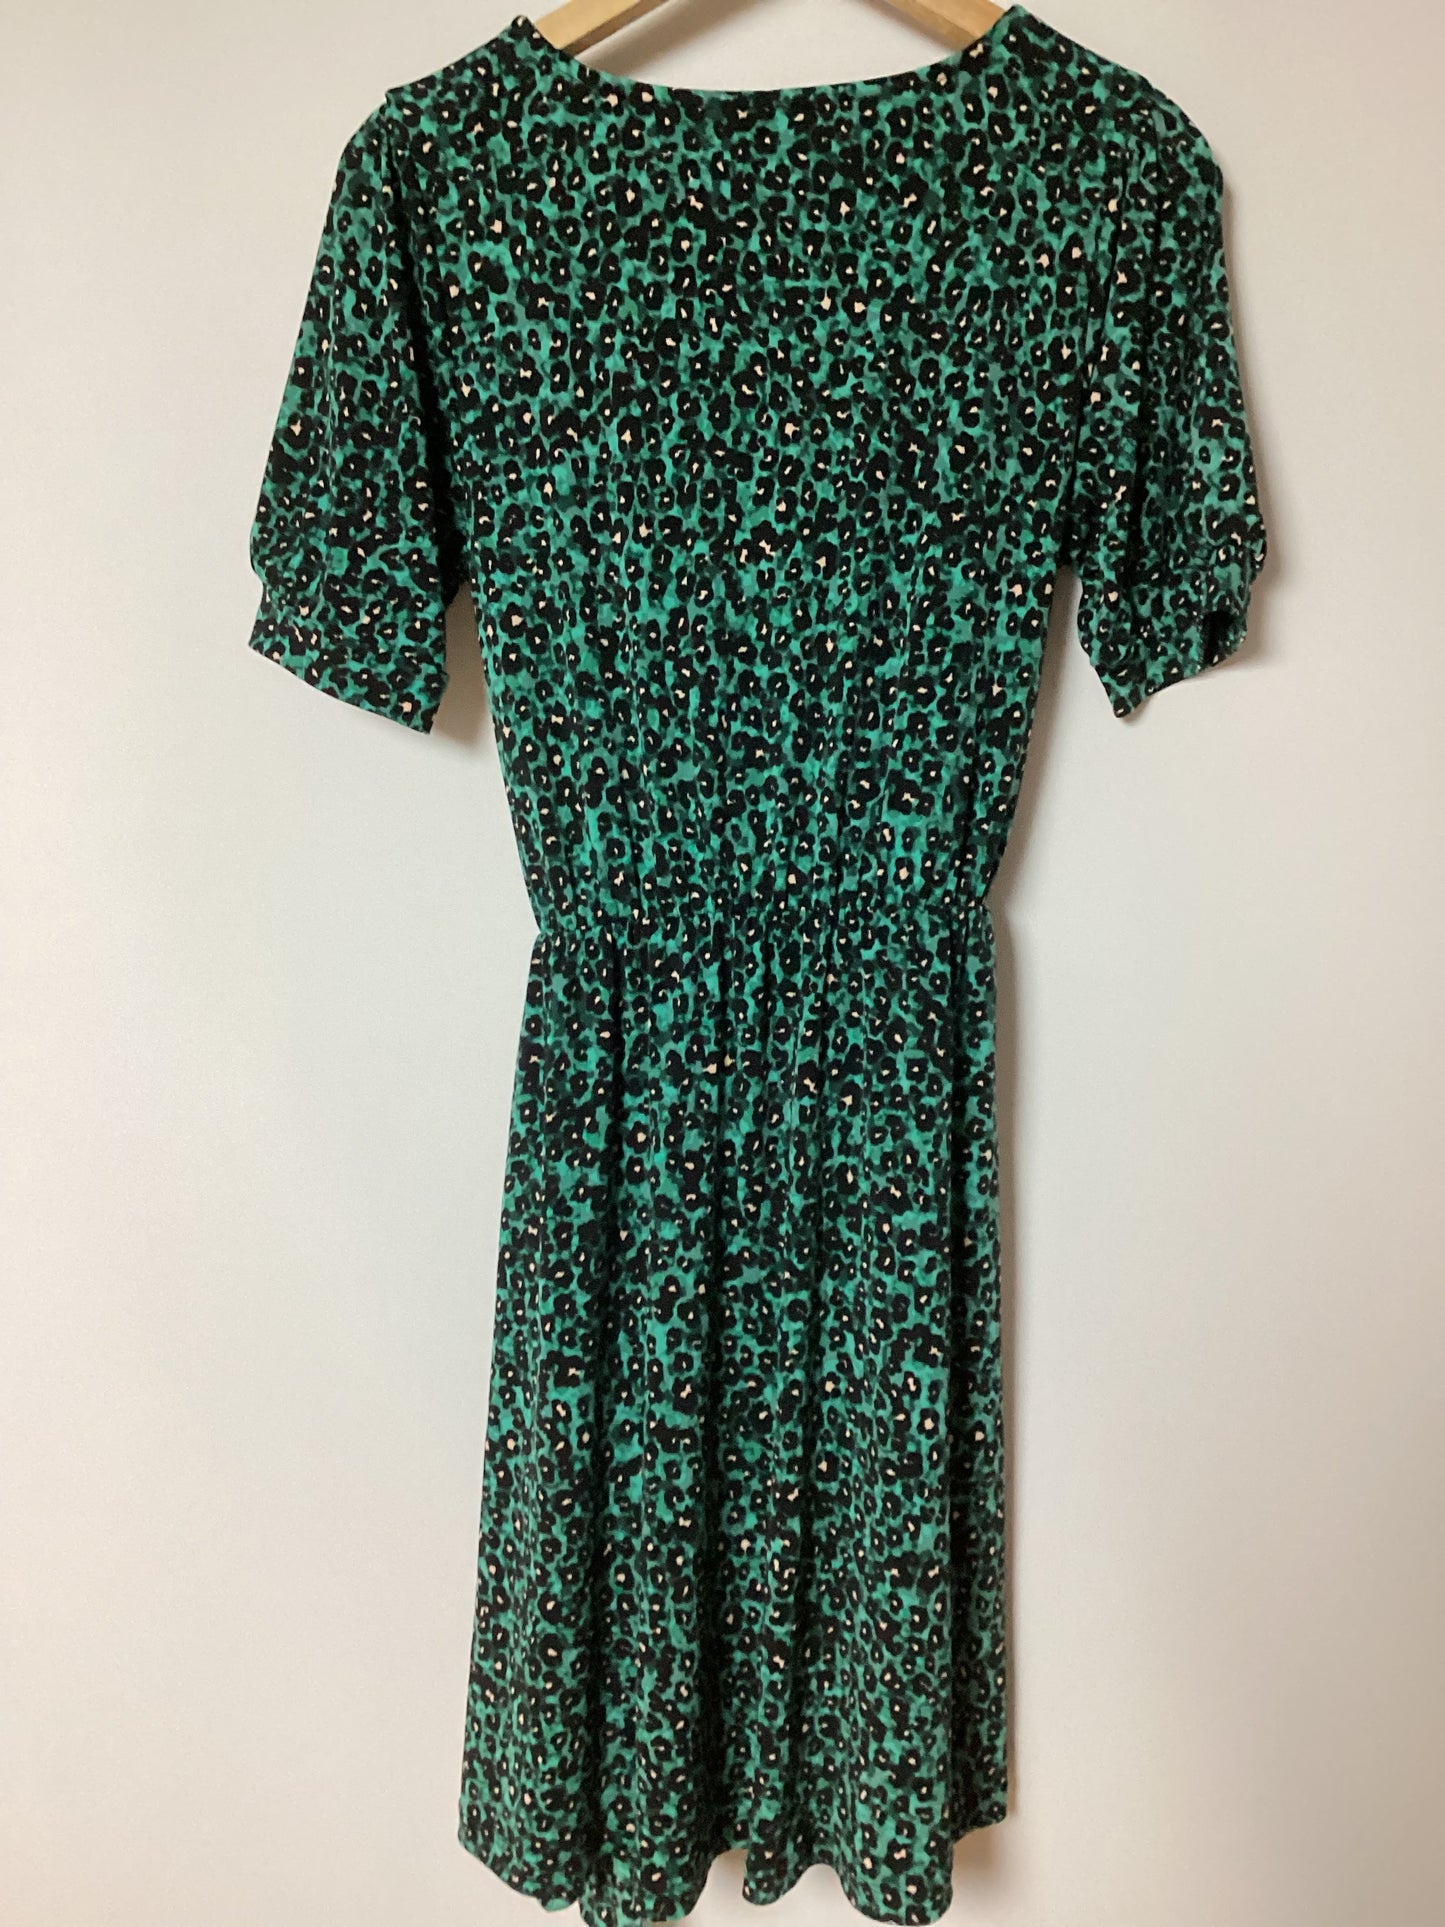 BNWT Oasis Green Leopard Print Dress Size S